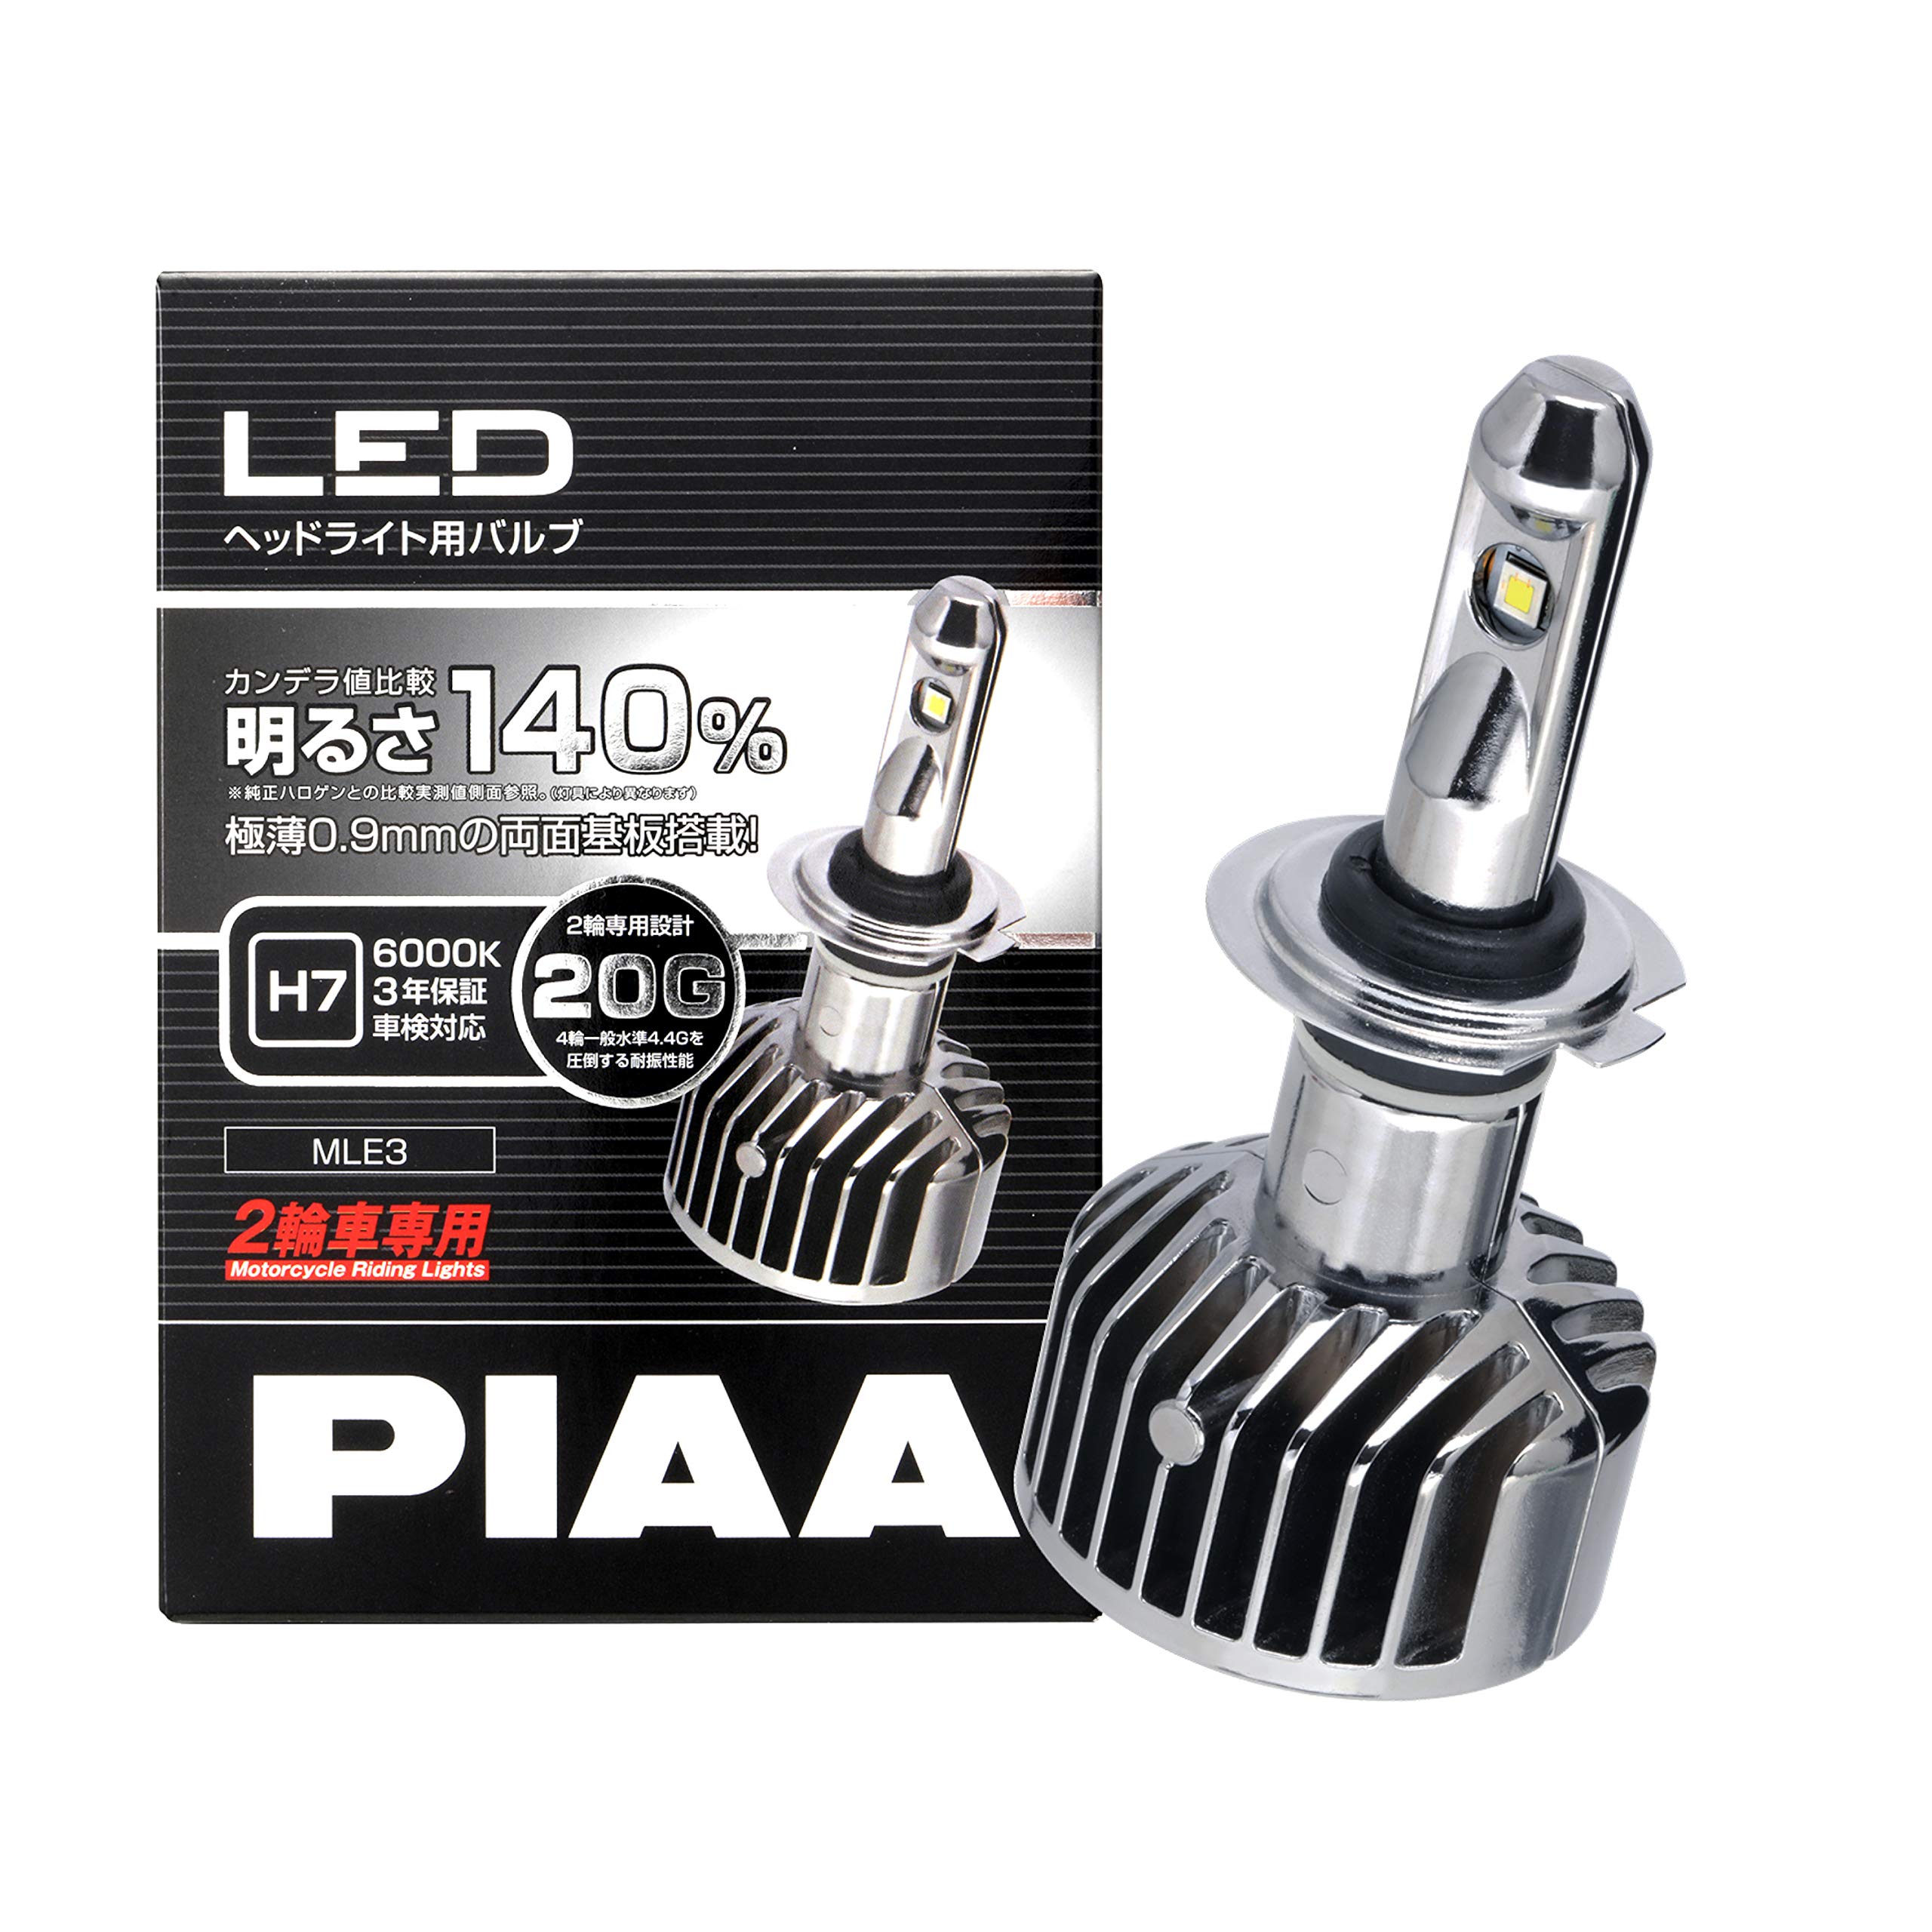 PIAA(ピア) 2輪車専用 ヘッドライト用LEDバルブ 6000K H7 タイプ 12V23W 車検対応 MLE3